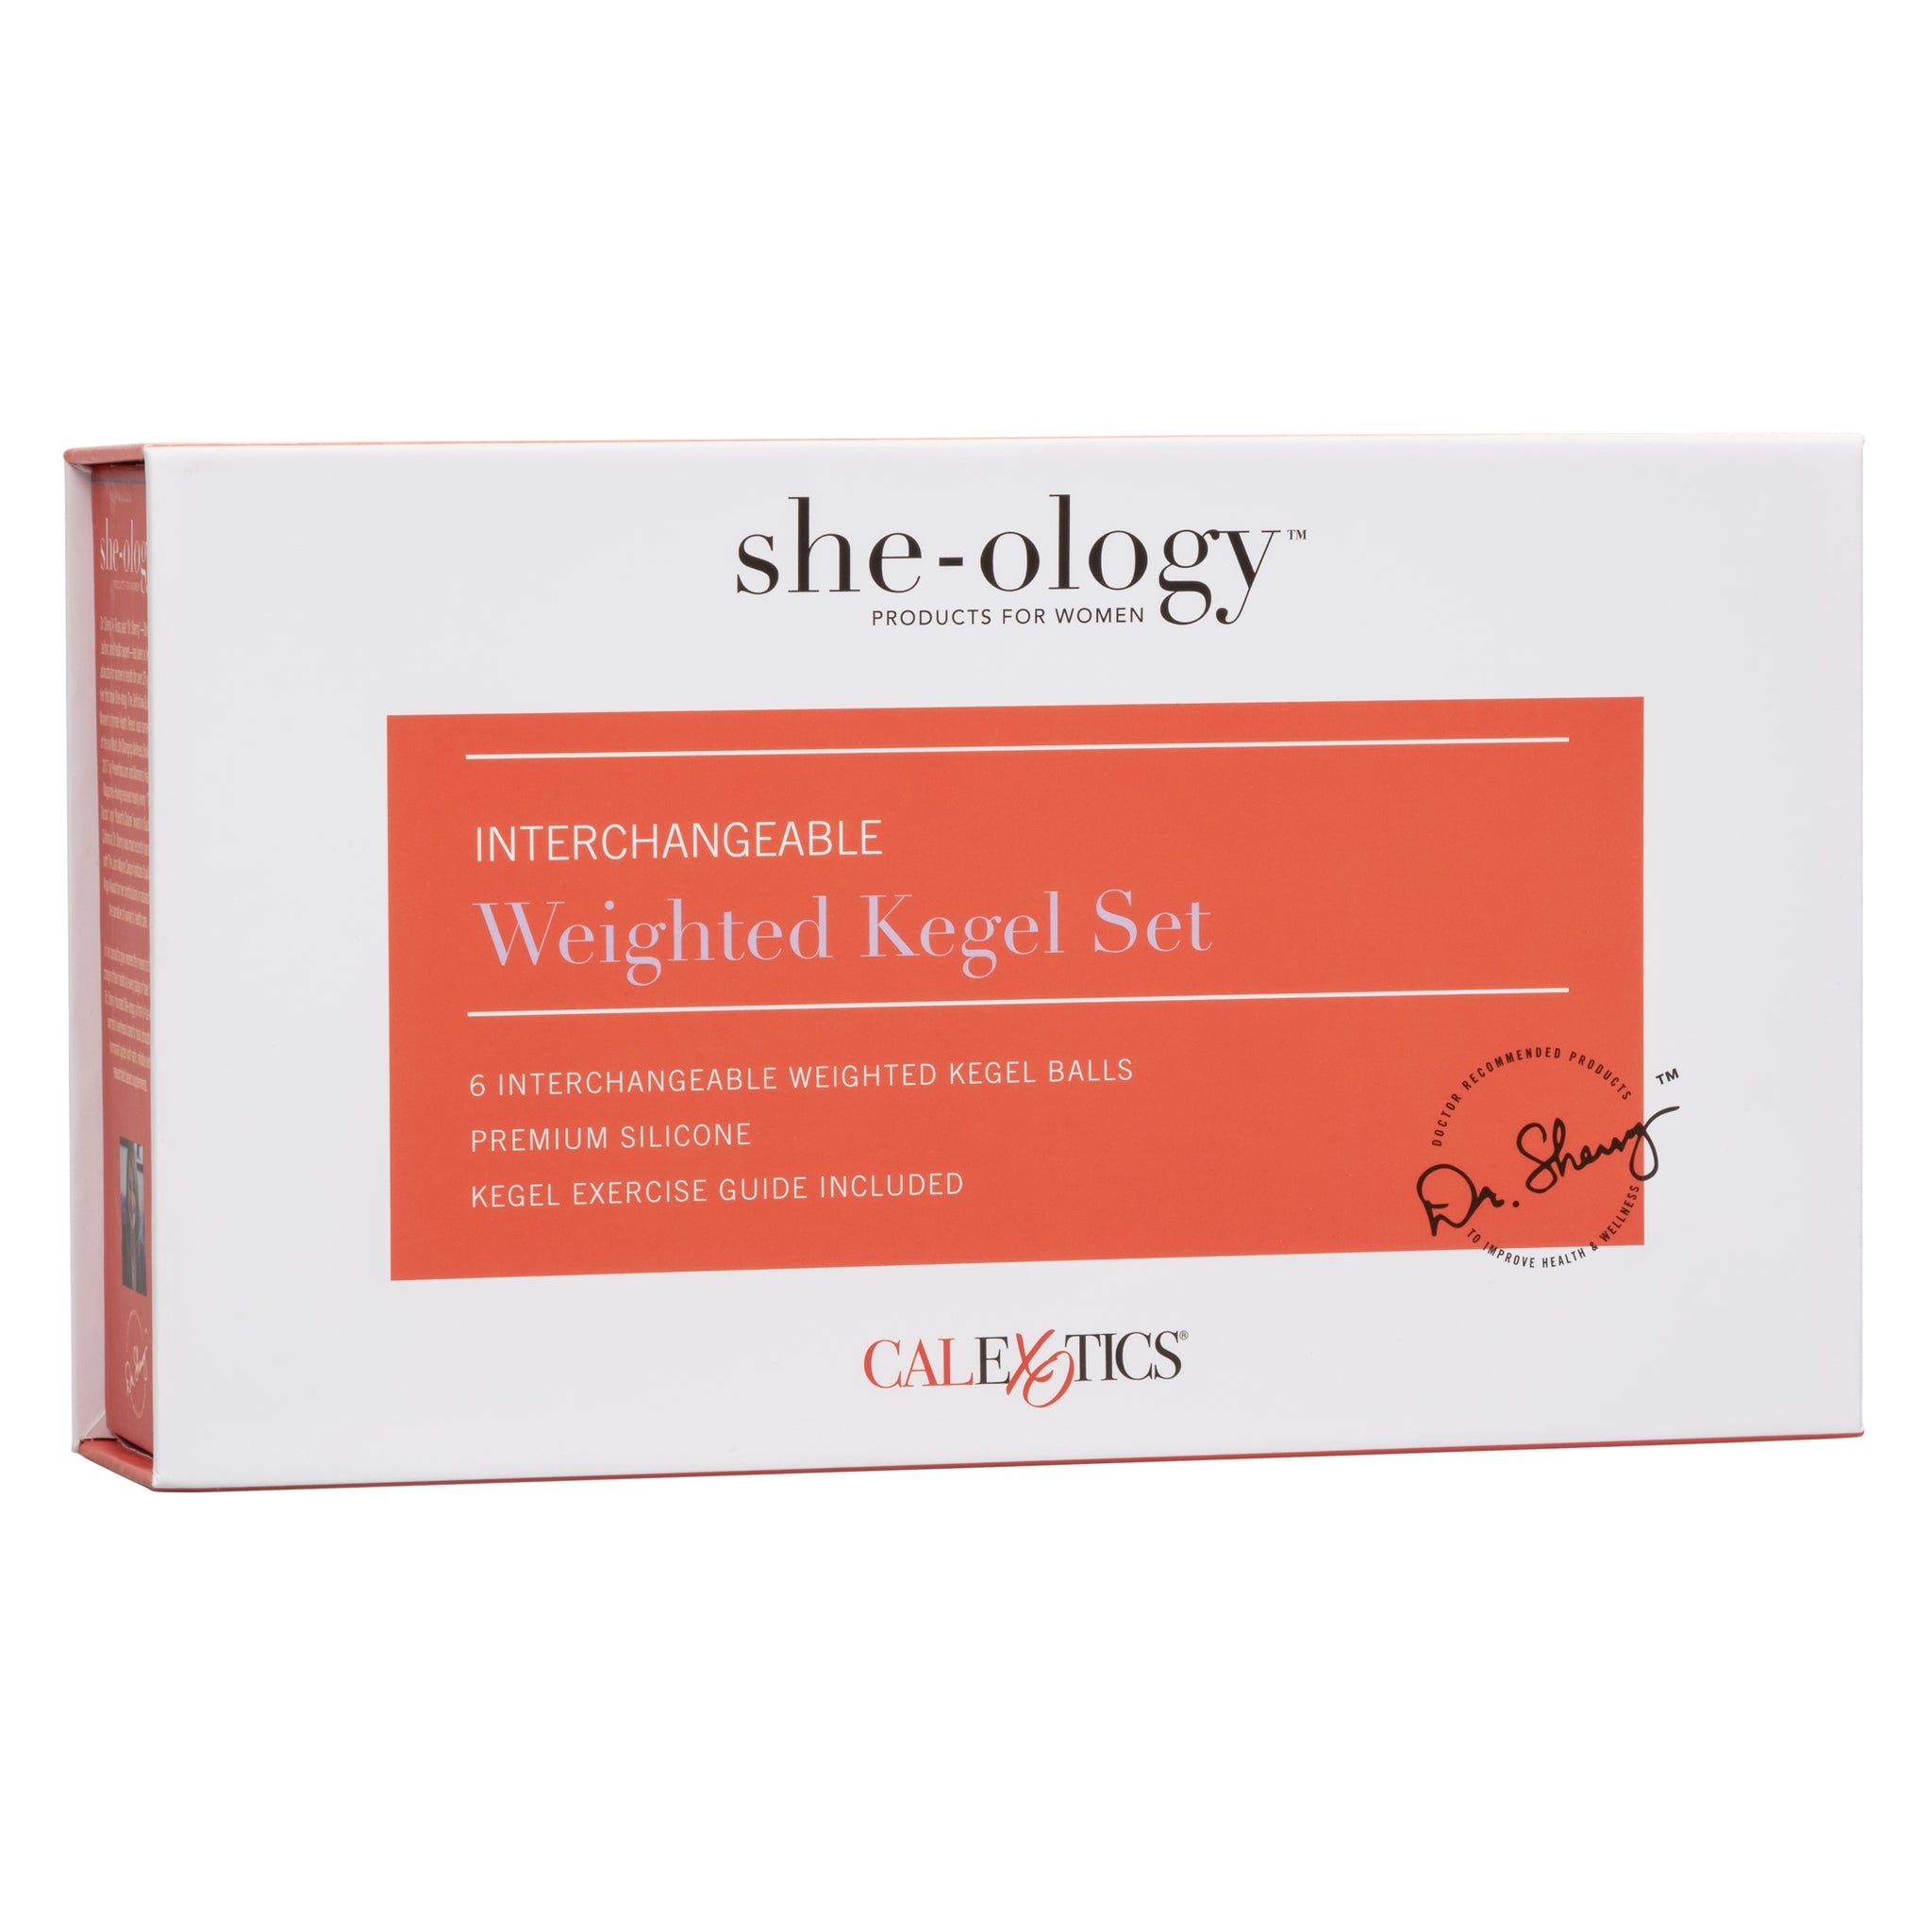 she-ology Interchangeable Kegel Wellness Products – she-ology Sexual Set